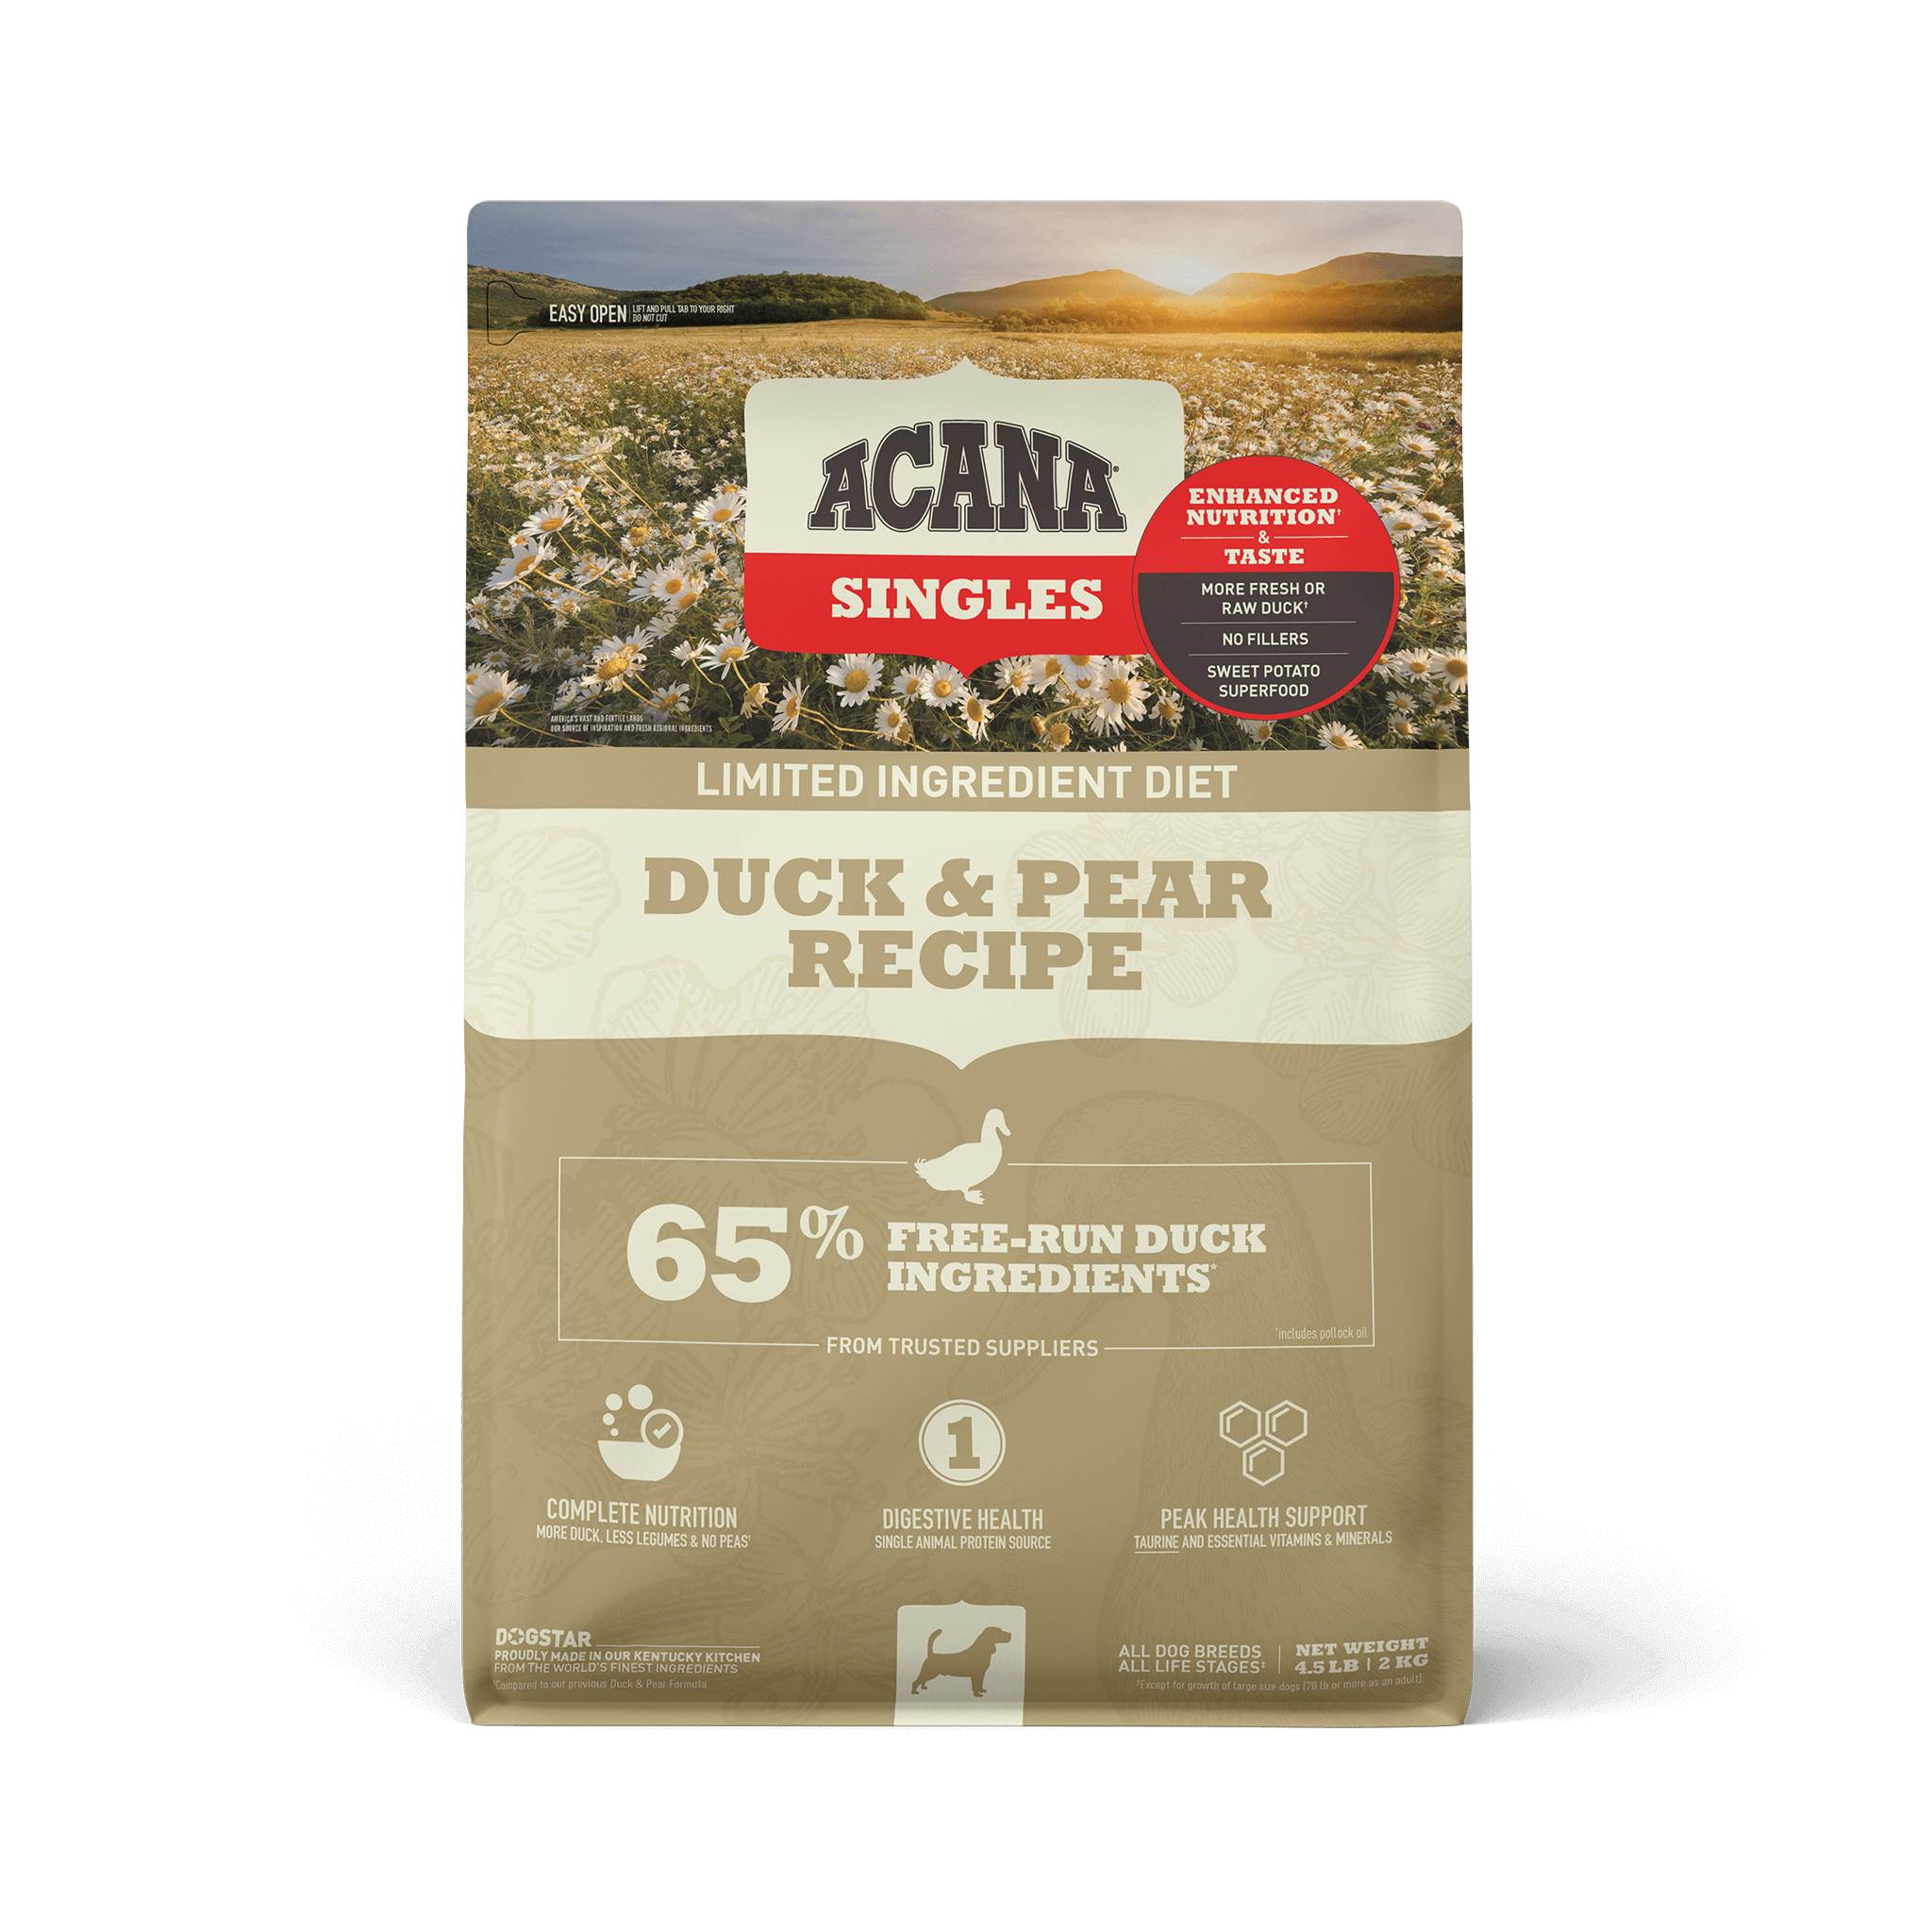 ACANA Dog Food - Singles Duck & Pear